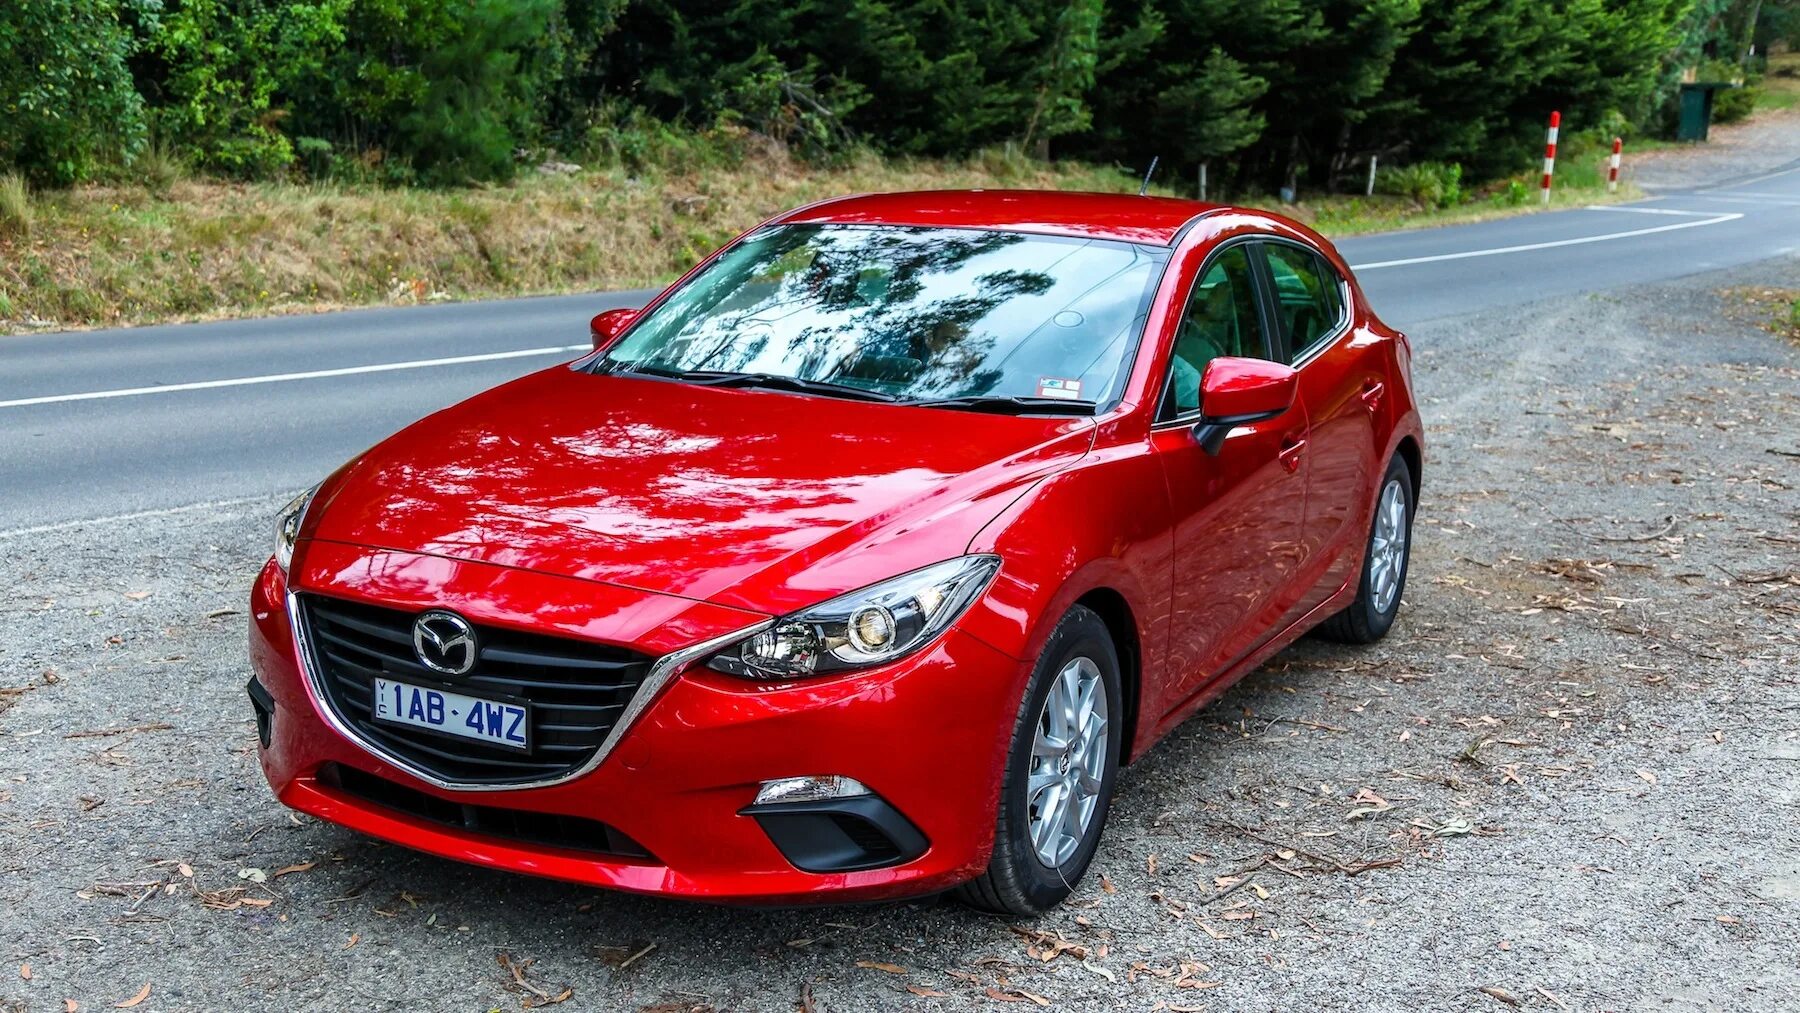 Купить мазду в туле. Mazda 3 2014. Мазда 3 2014 цвет красный. Мазда 3 Review. Мазда 2014.